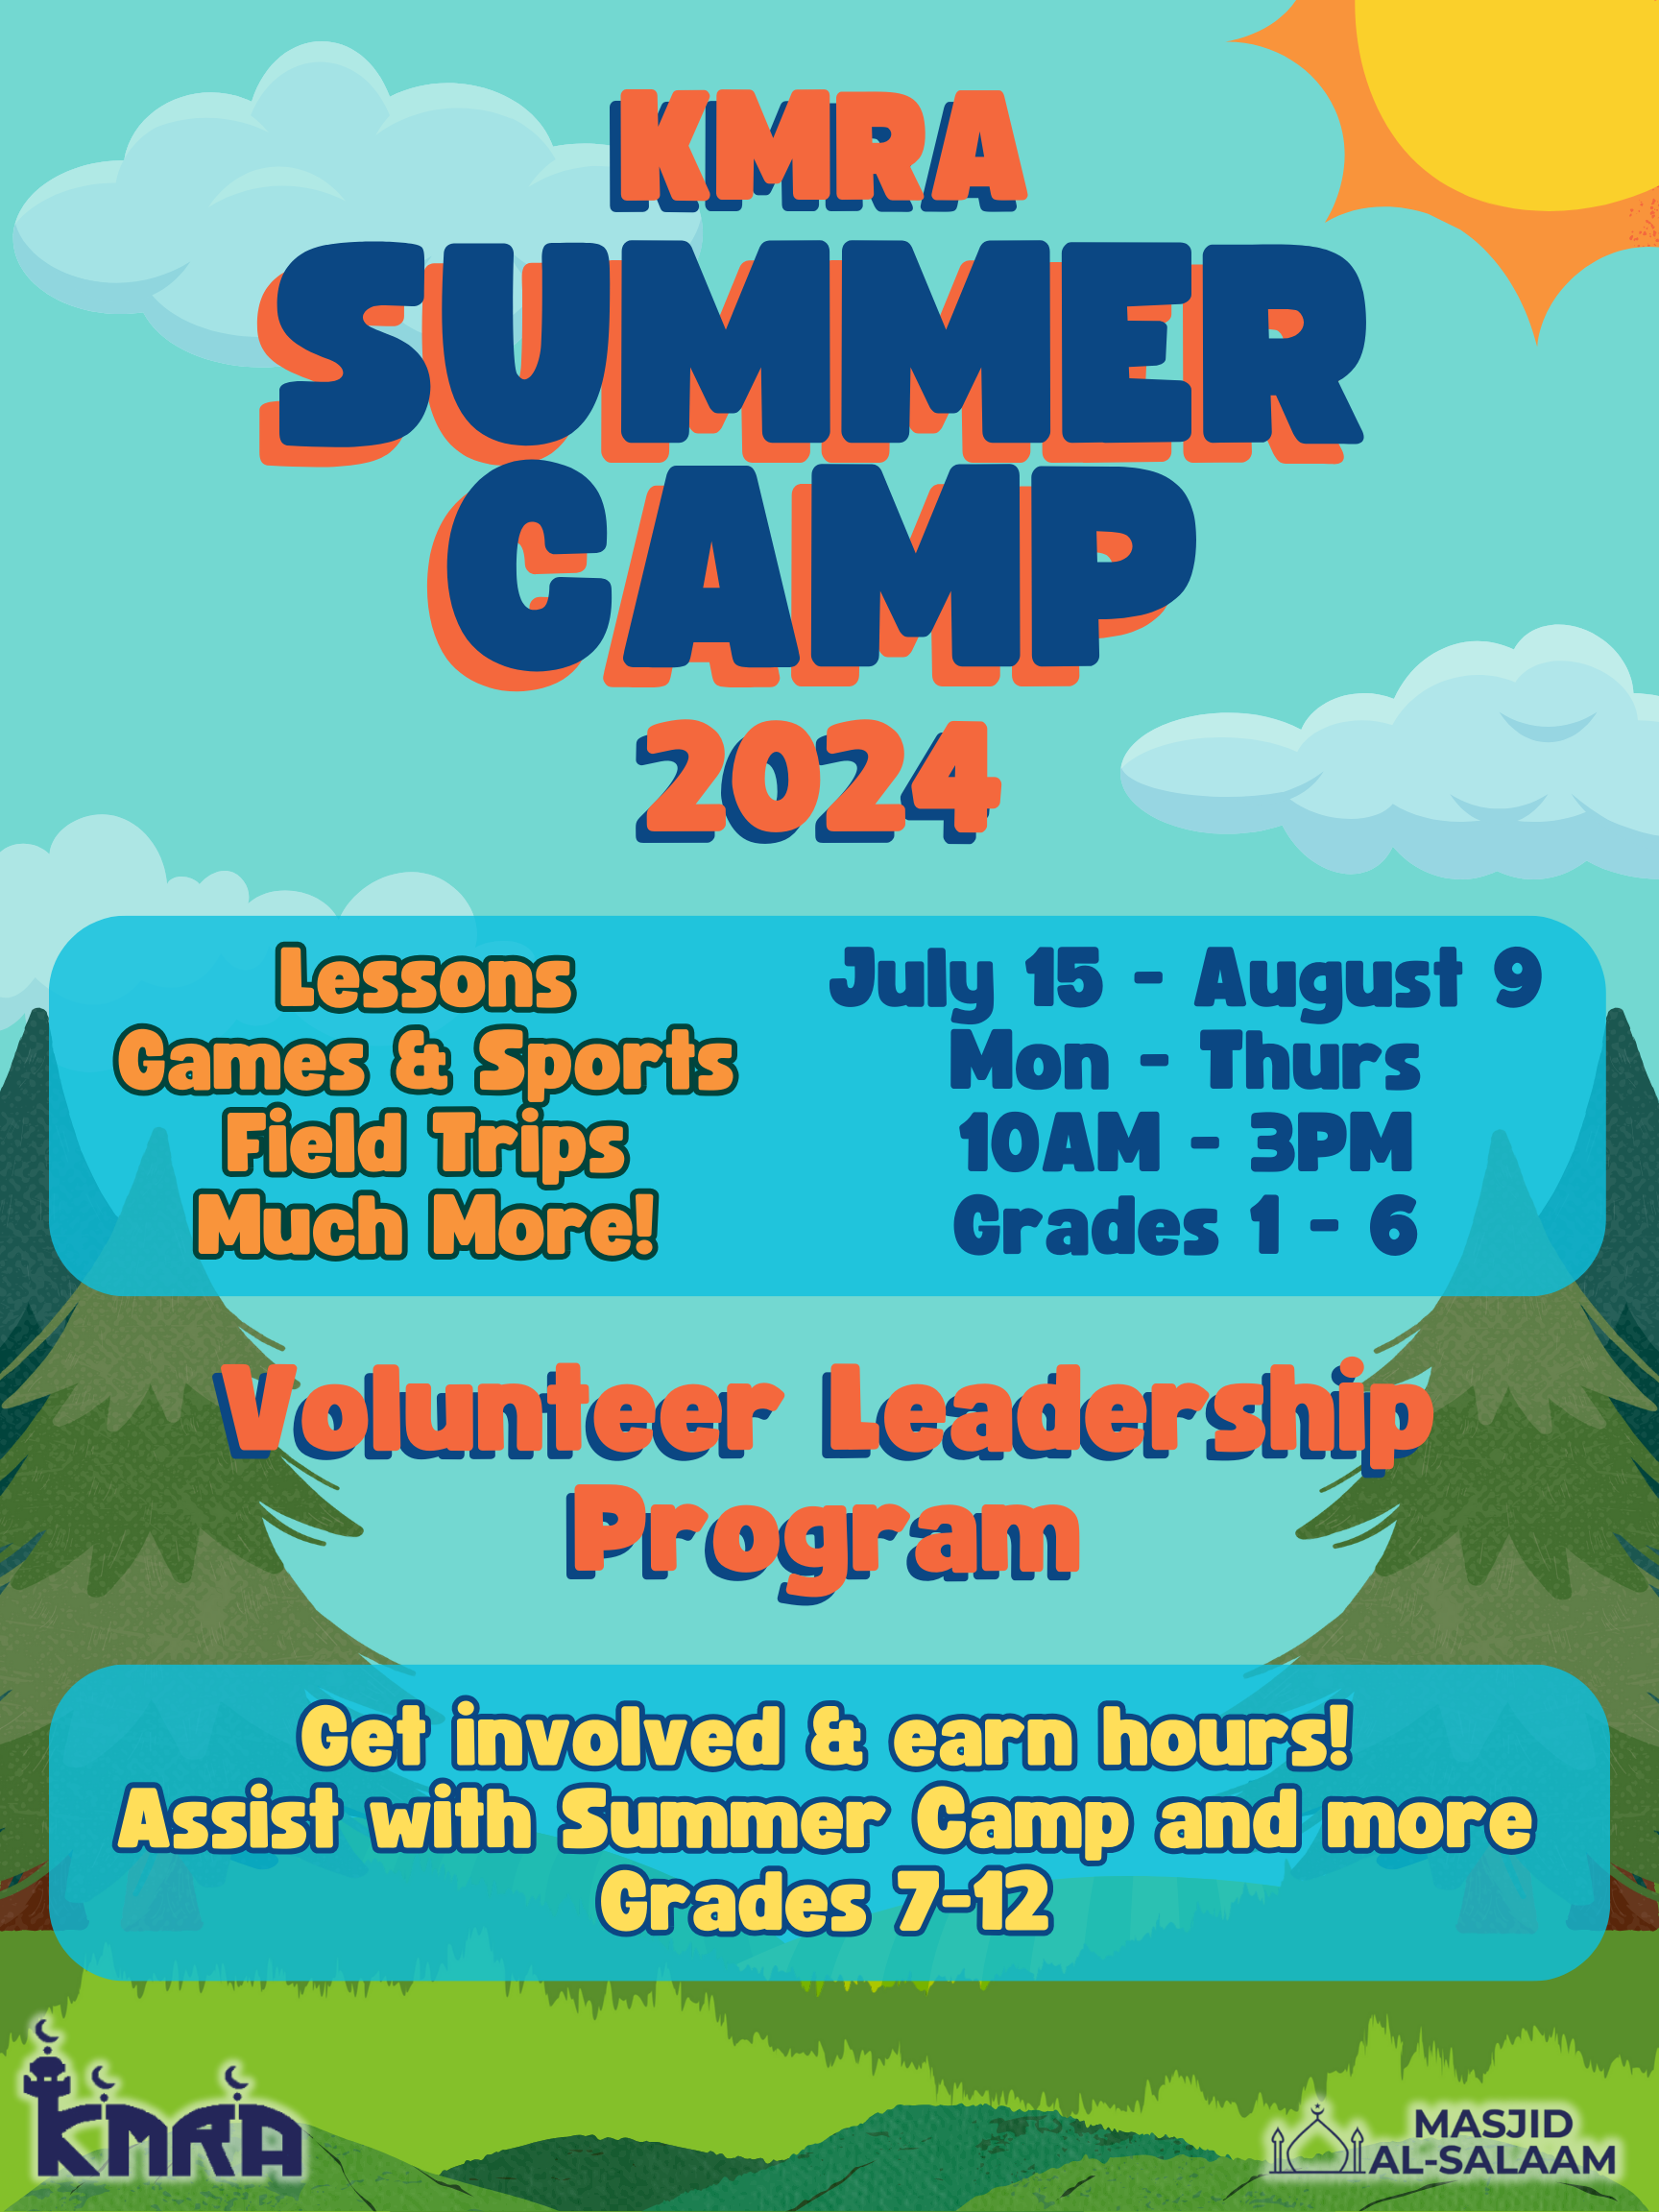 KMRA Summer Camp and Volunteer Leadership Program